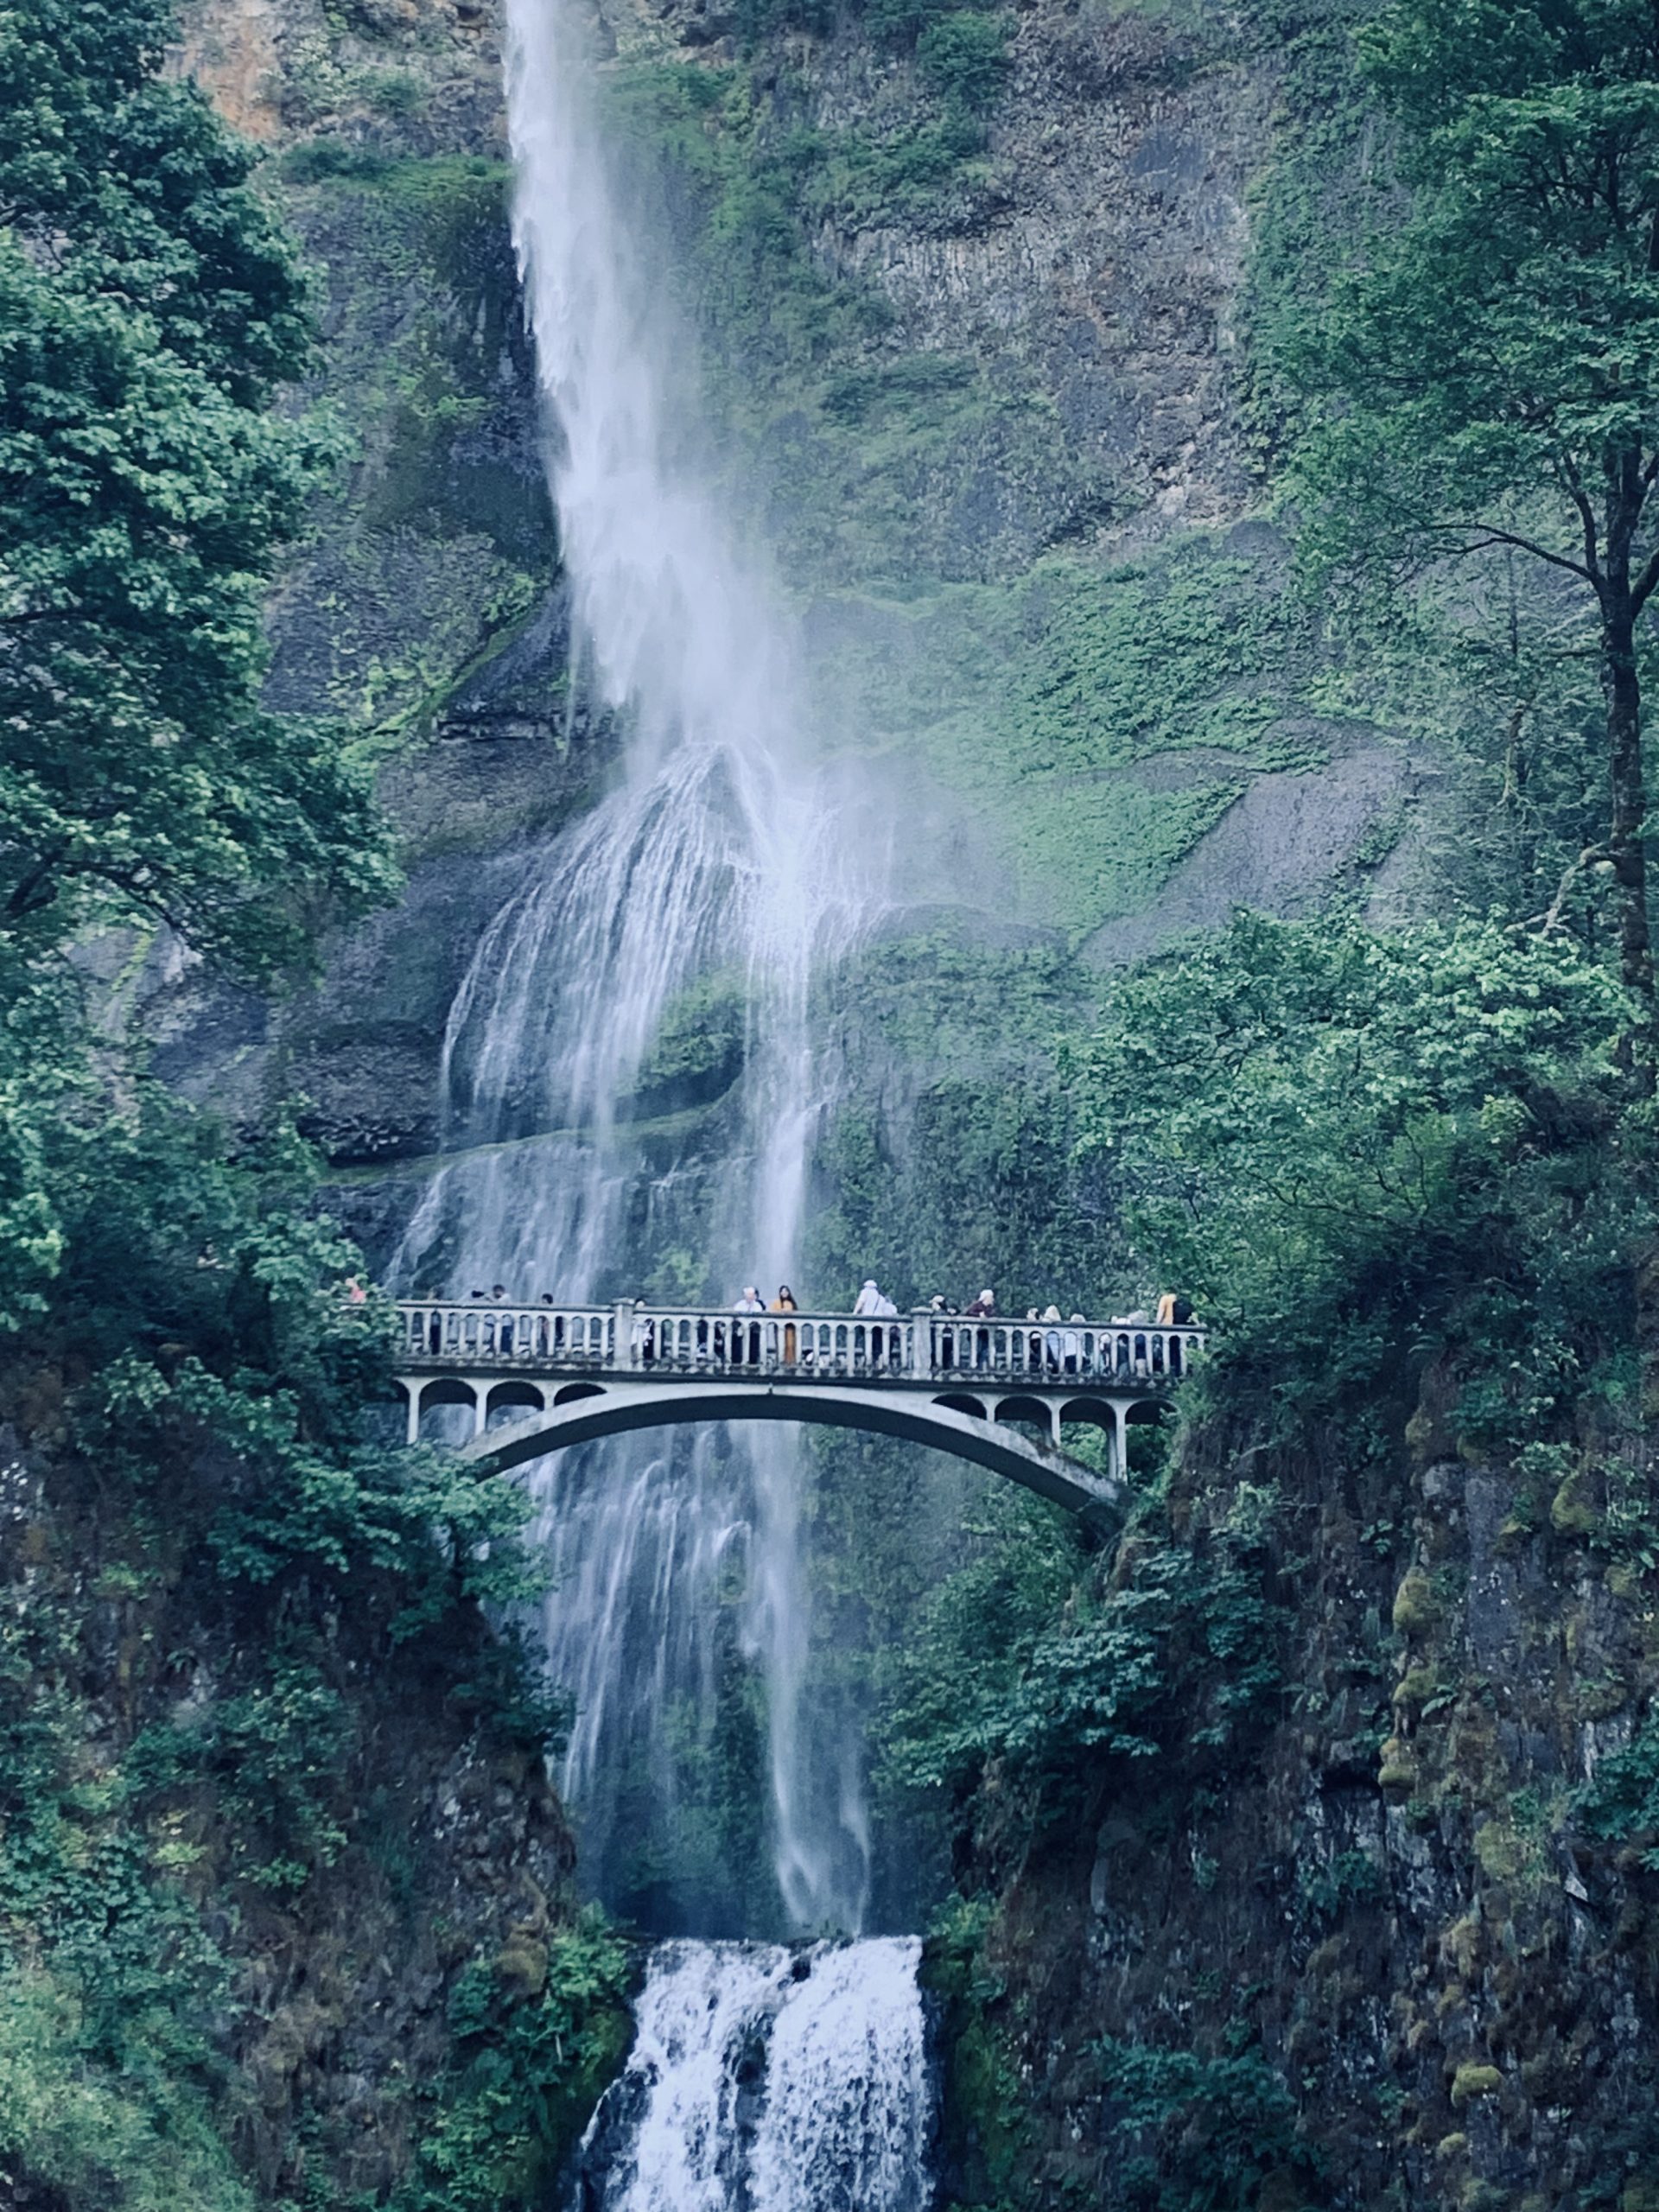 Bridge in front of large waterfall in Oregon